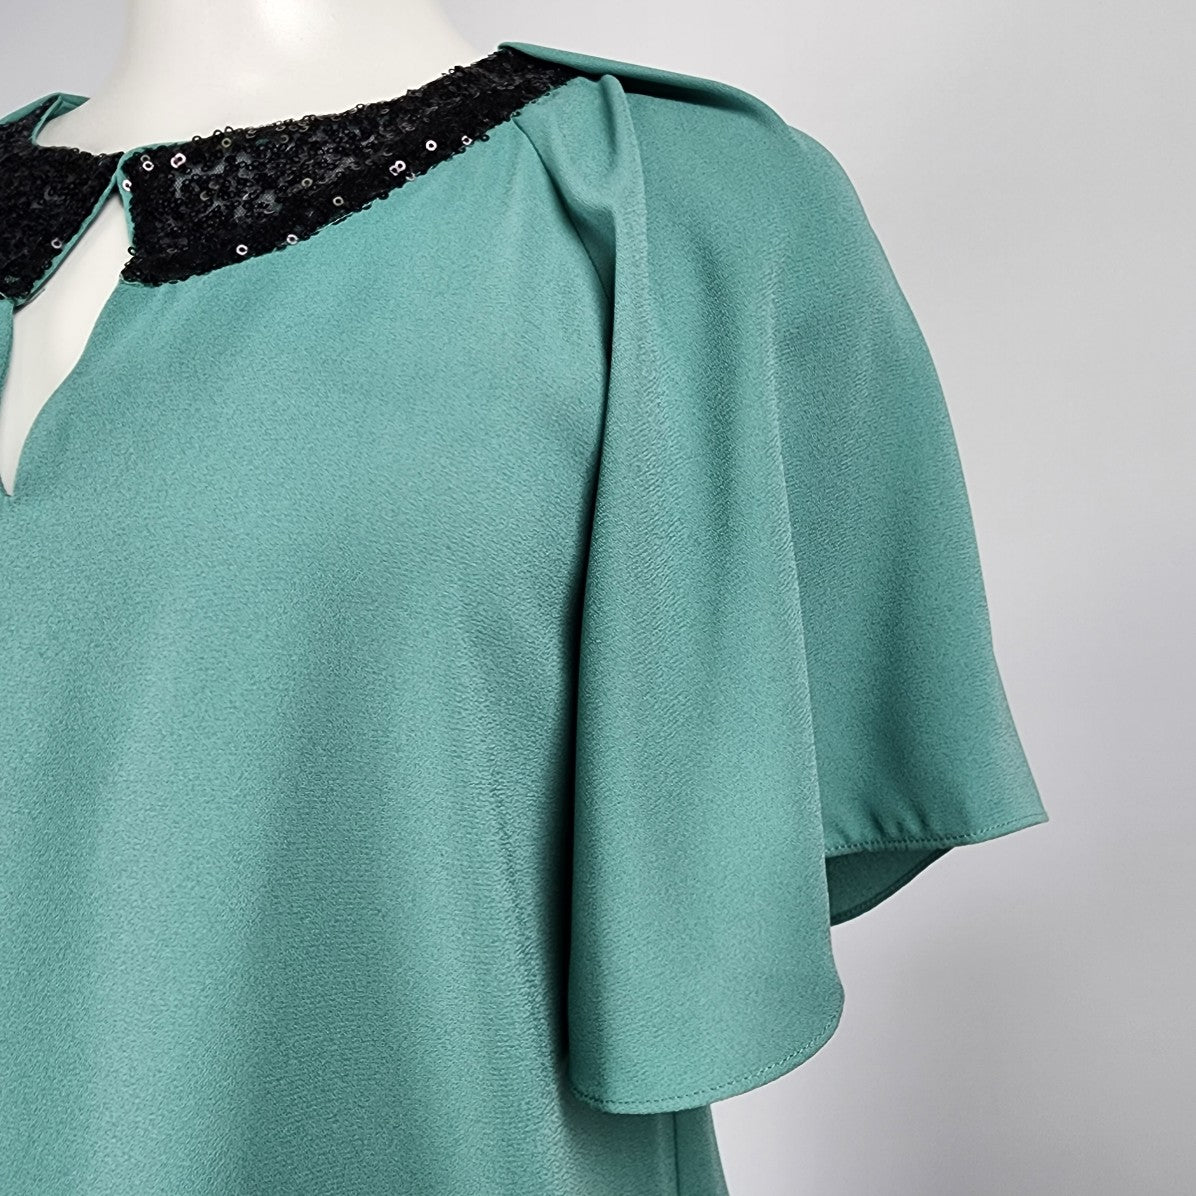 Rachel Roy Green & Black Sequined Blouse Size S Flutter Sleeve